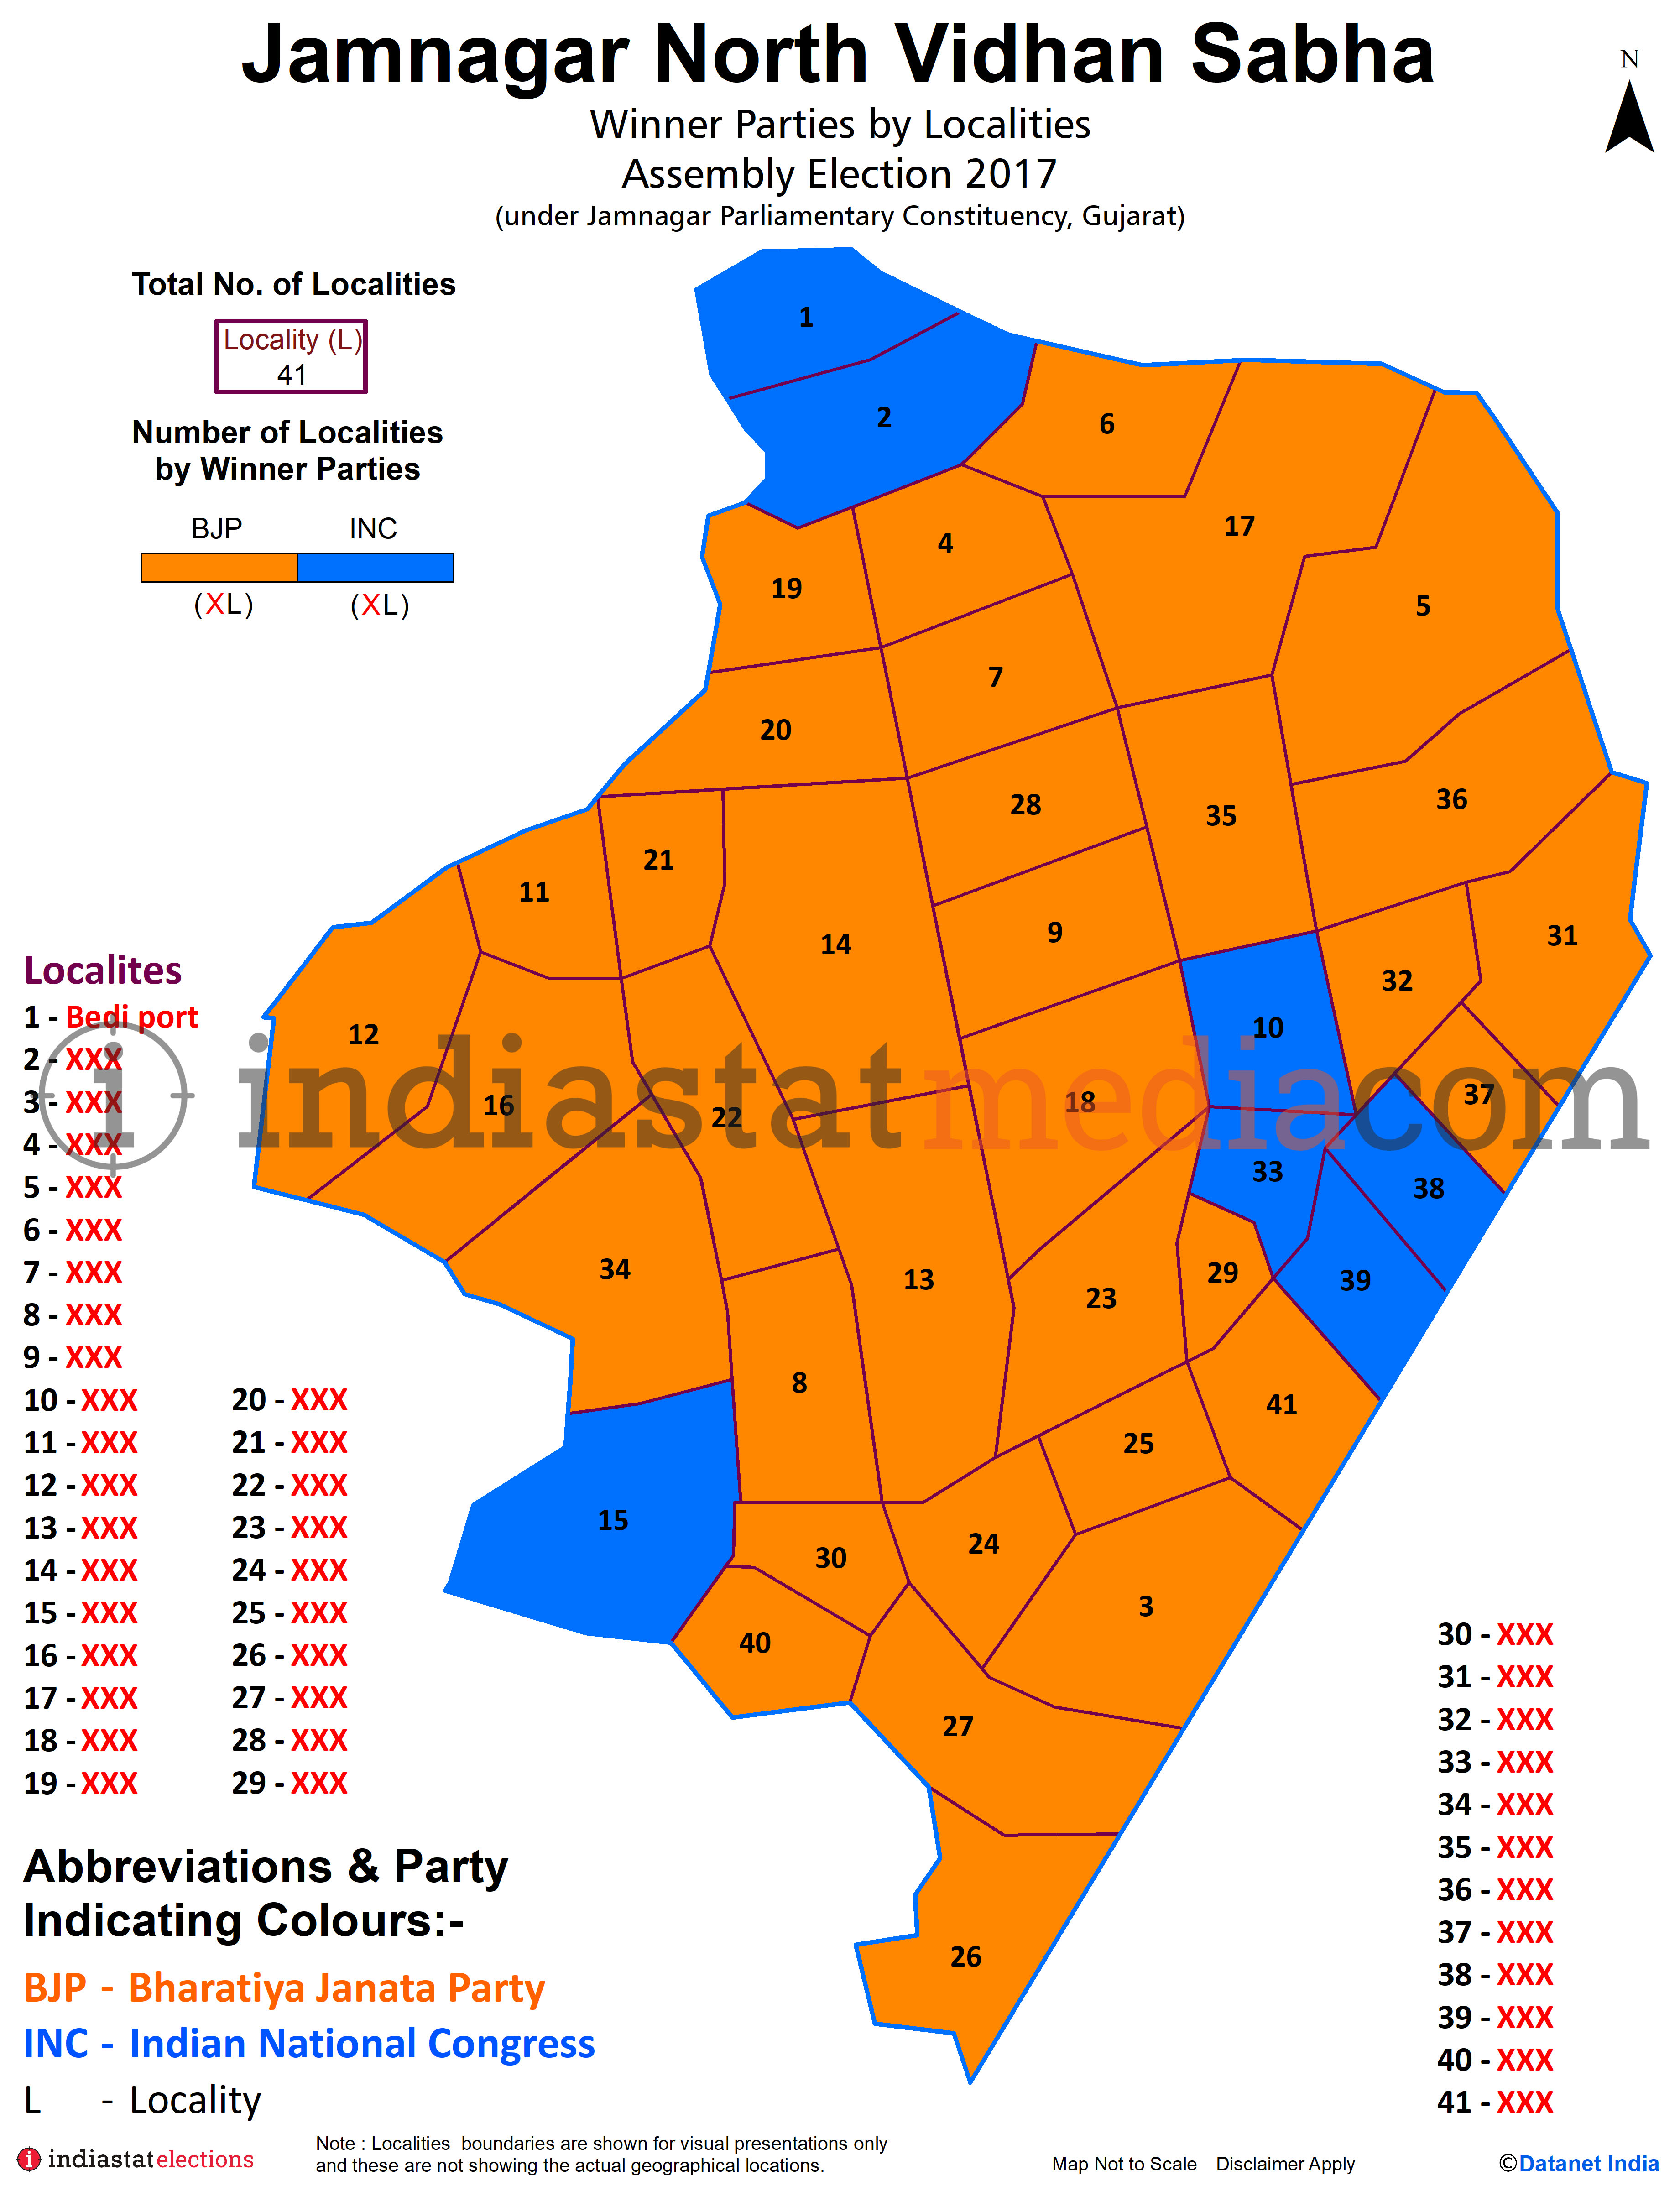 Winner Parties by Localities in Jamnagar North Assembly Constituency under Jamnagar Parliamentary Constituency in Gujarat (Assembly Election - 2017)